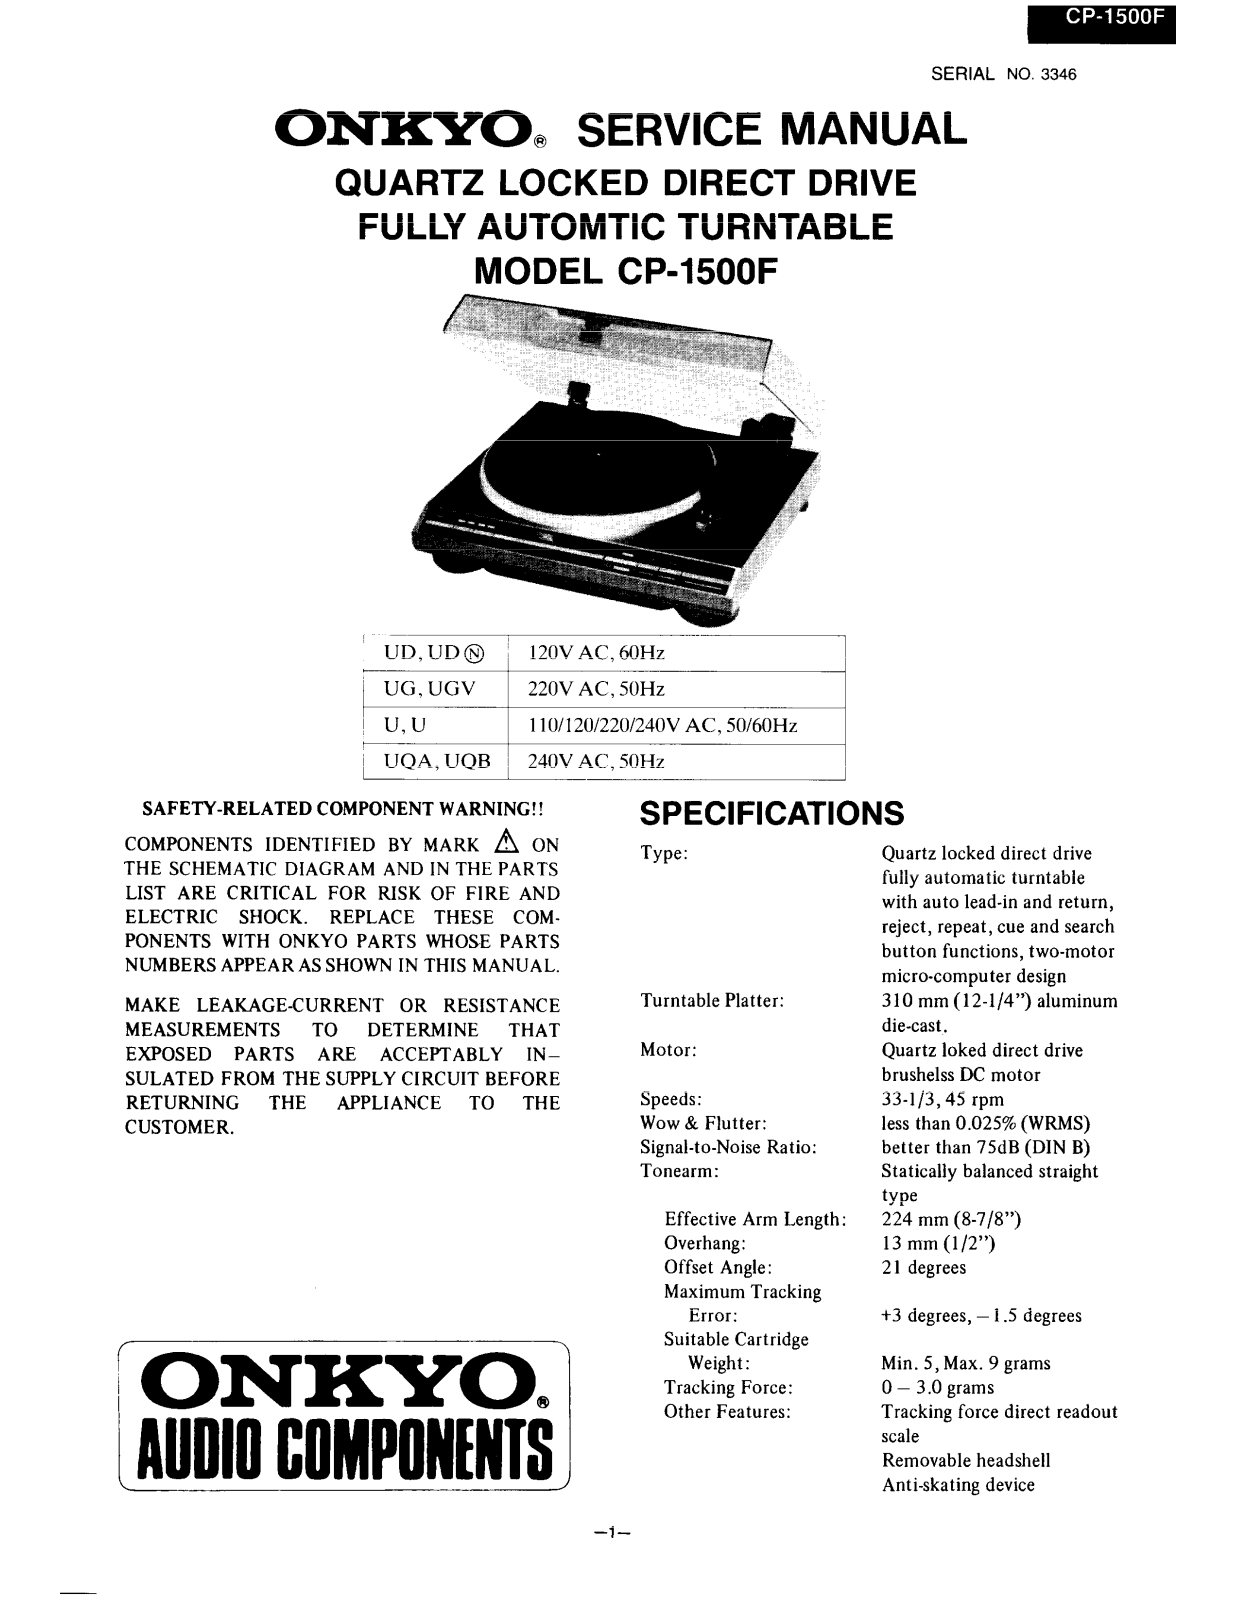 Onkyo CP-1500-F Service Manual